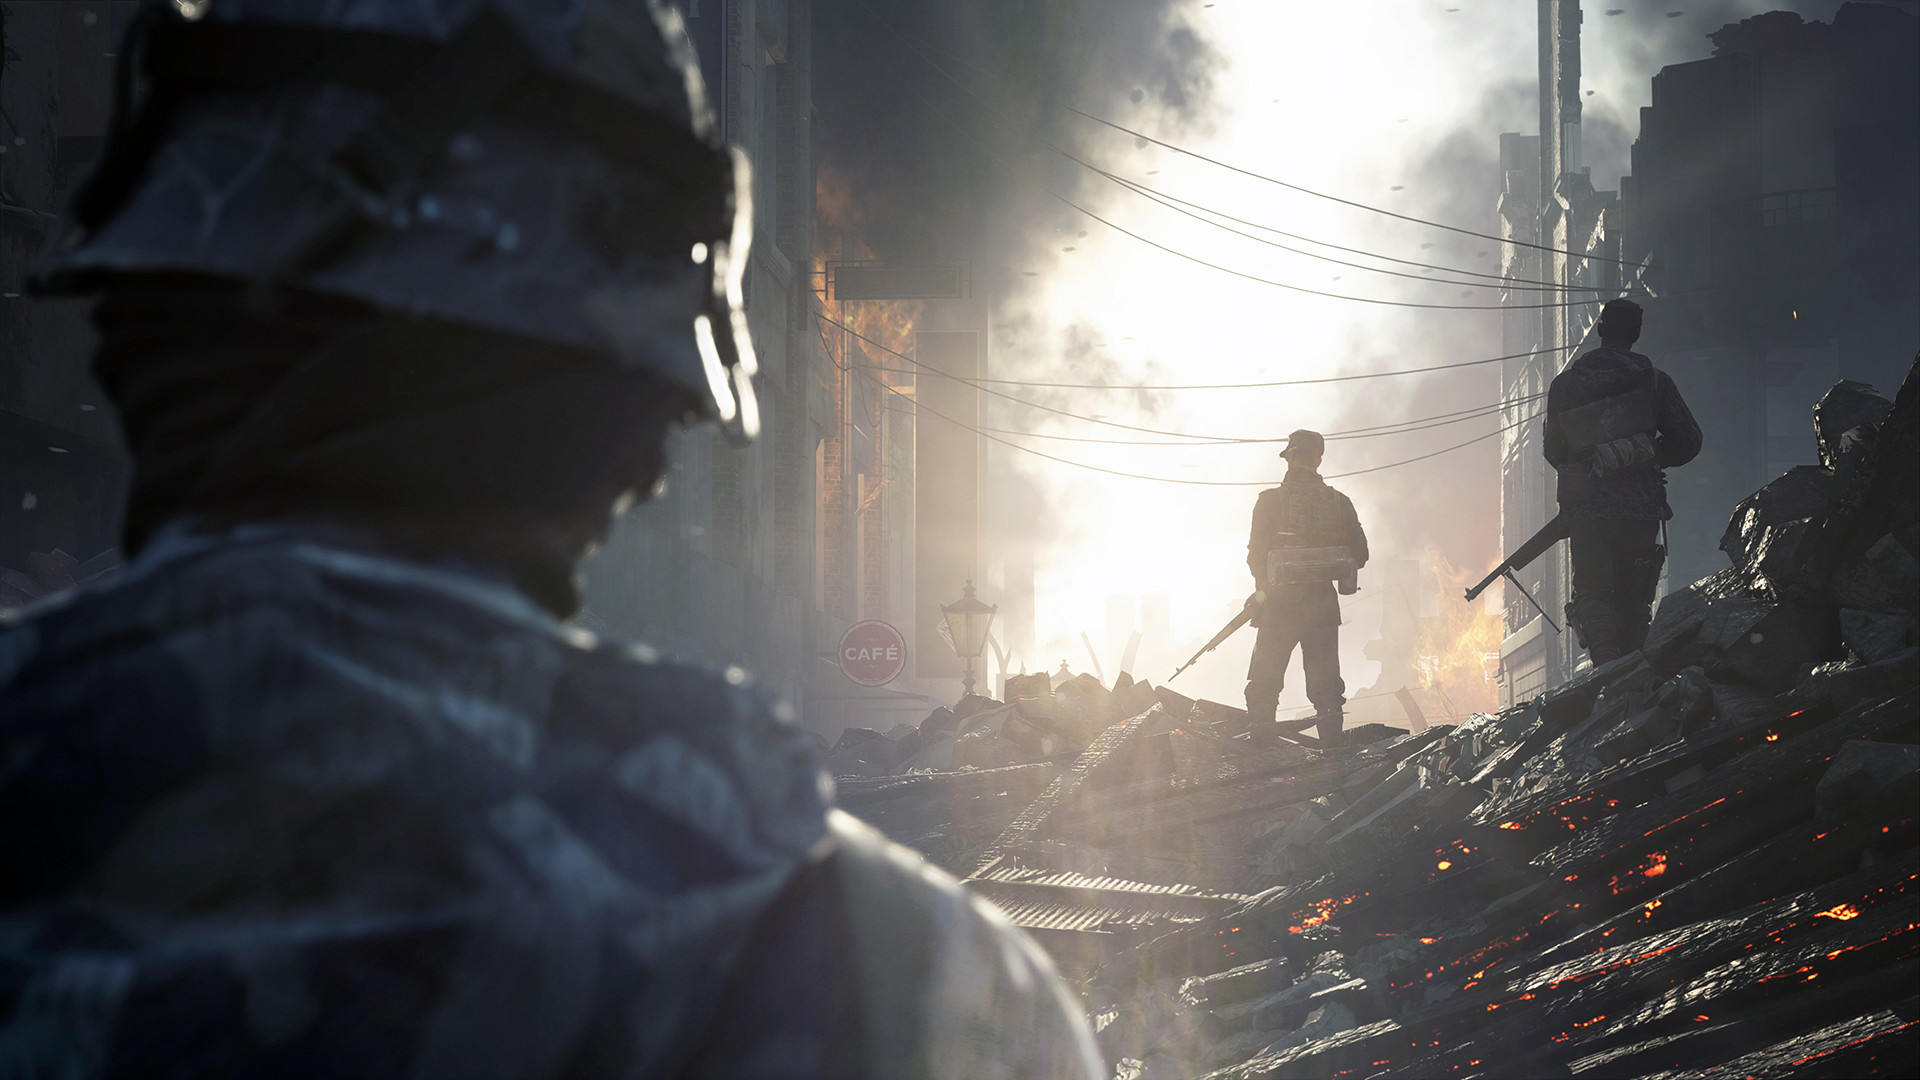 Battlefield™ V - Battlefield Definitive Edition Available now - Steam News